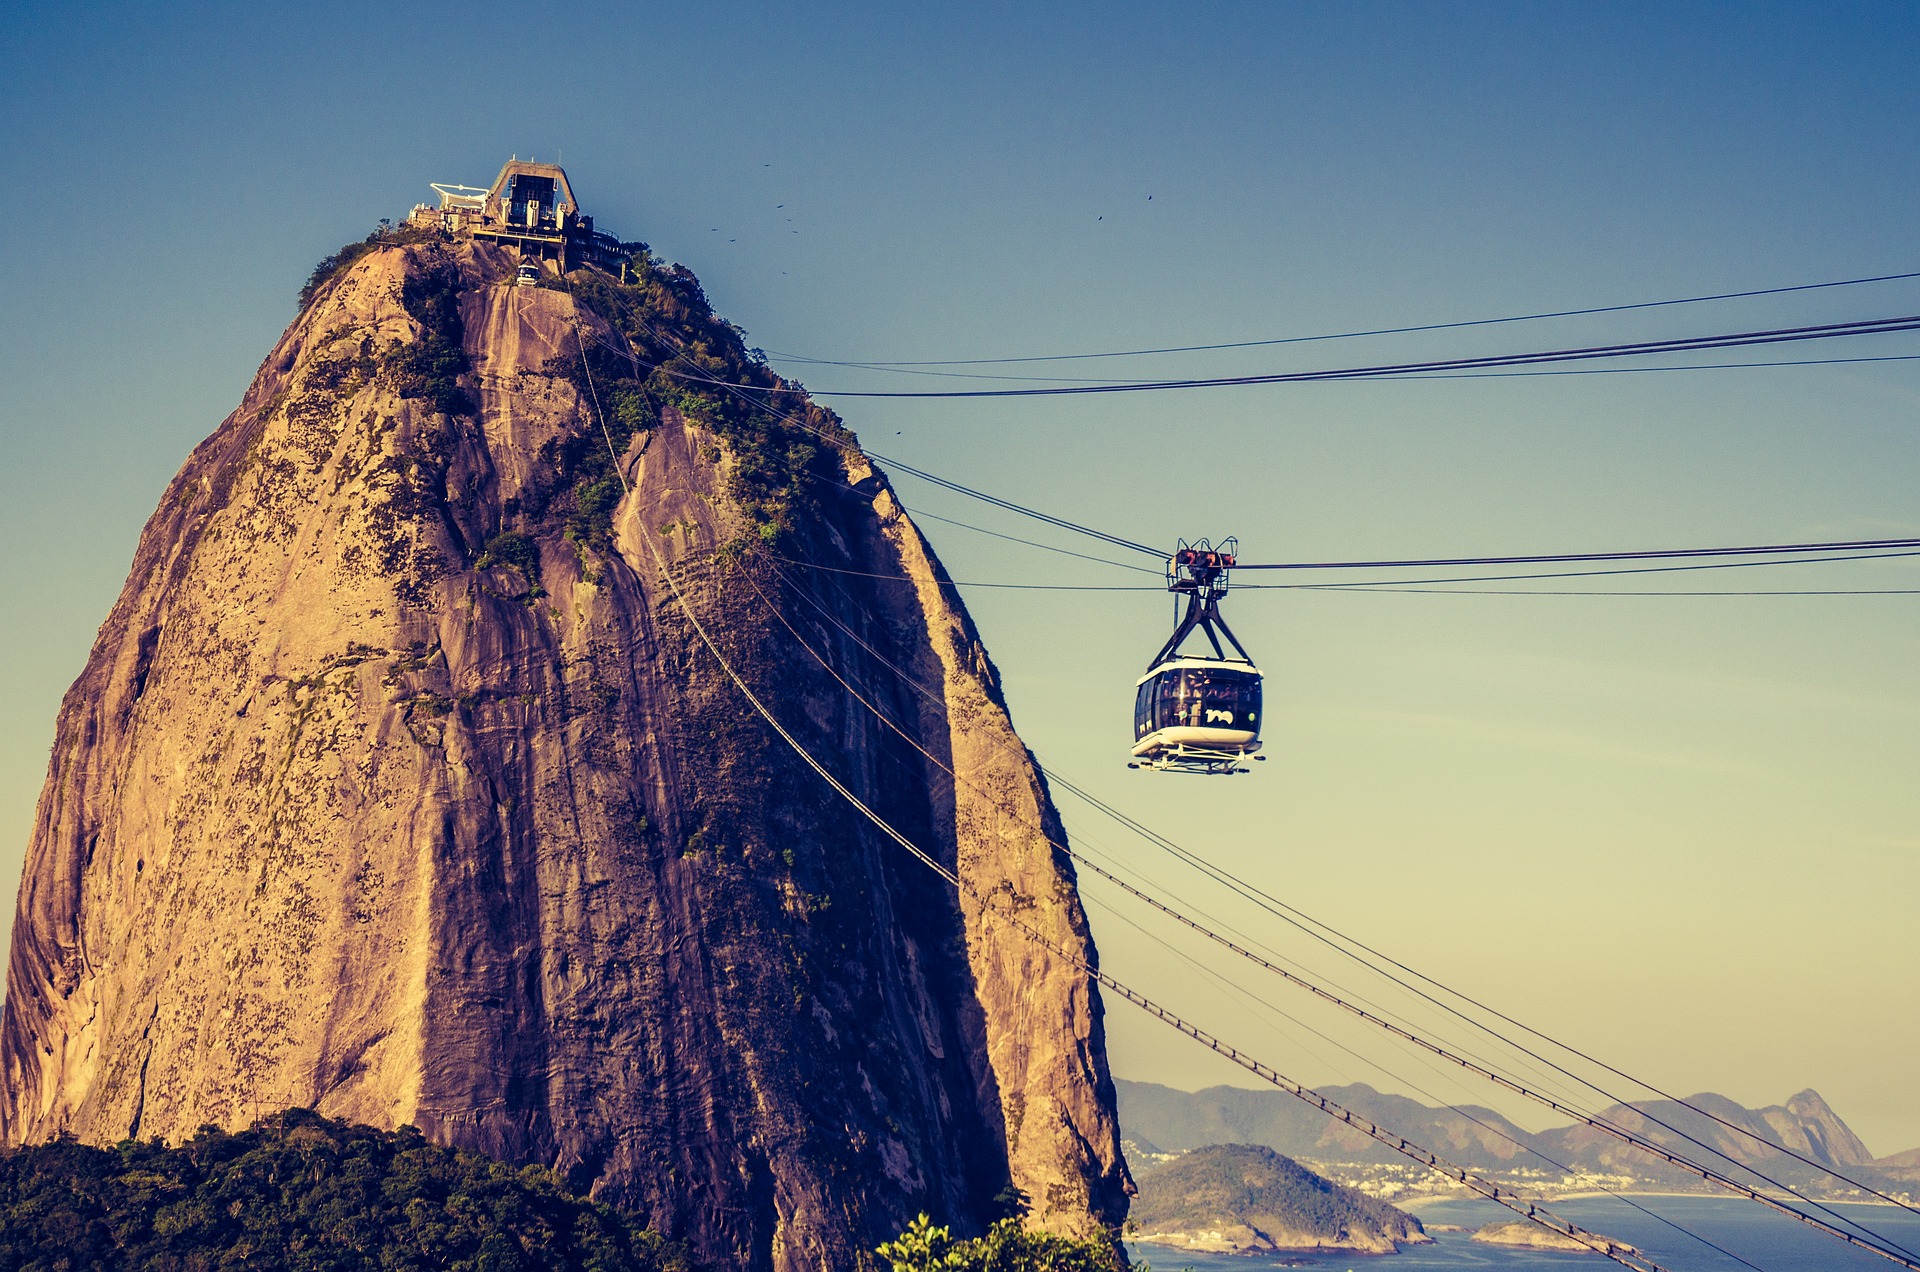 Rio de Žaneiro protiv nove turističke atrakcije – ziplajn